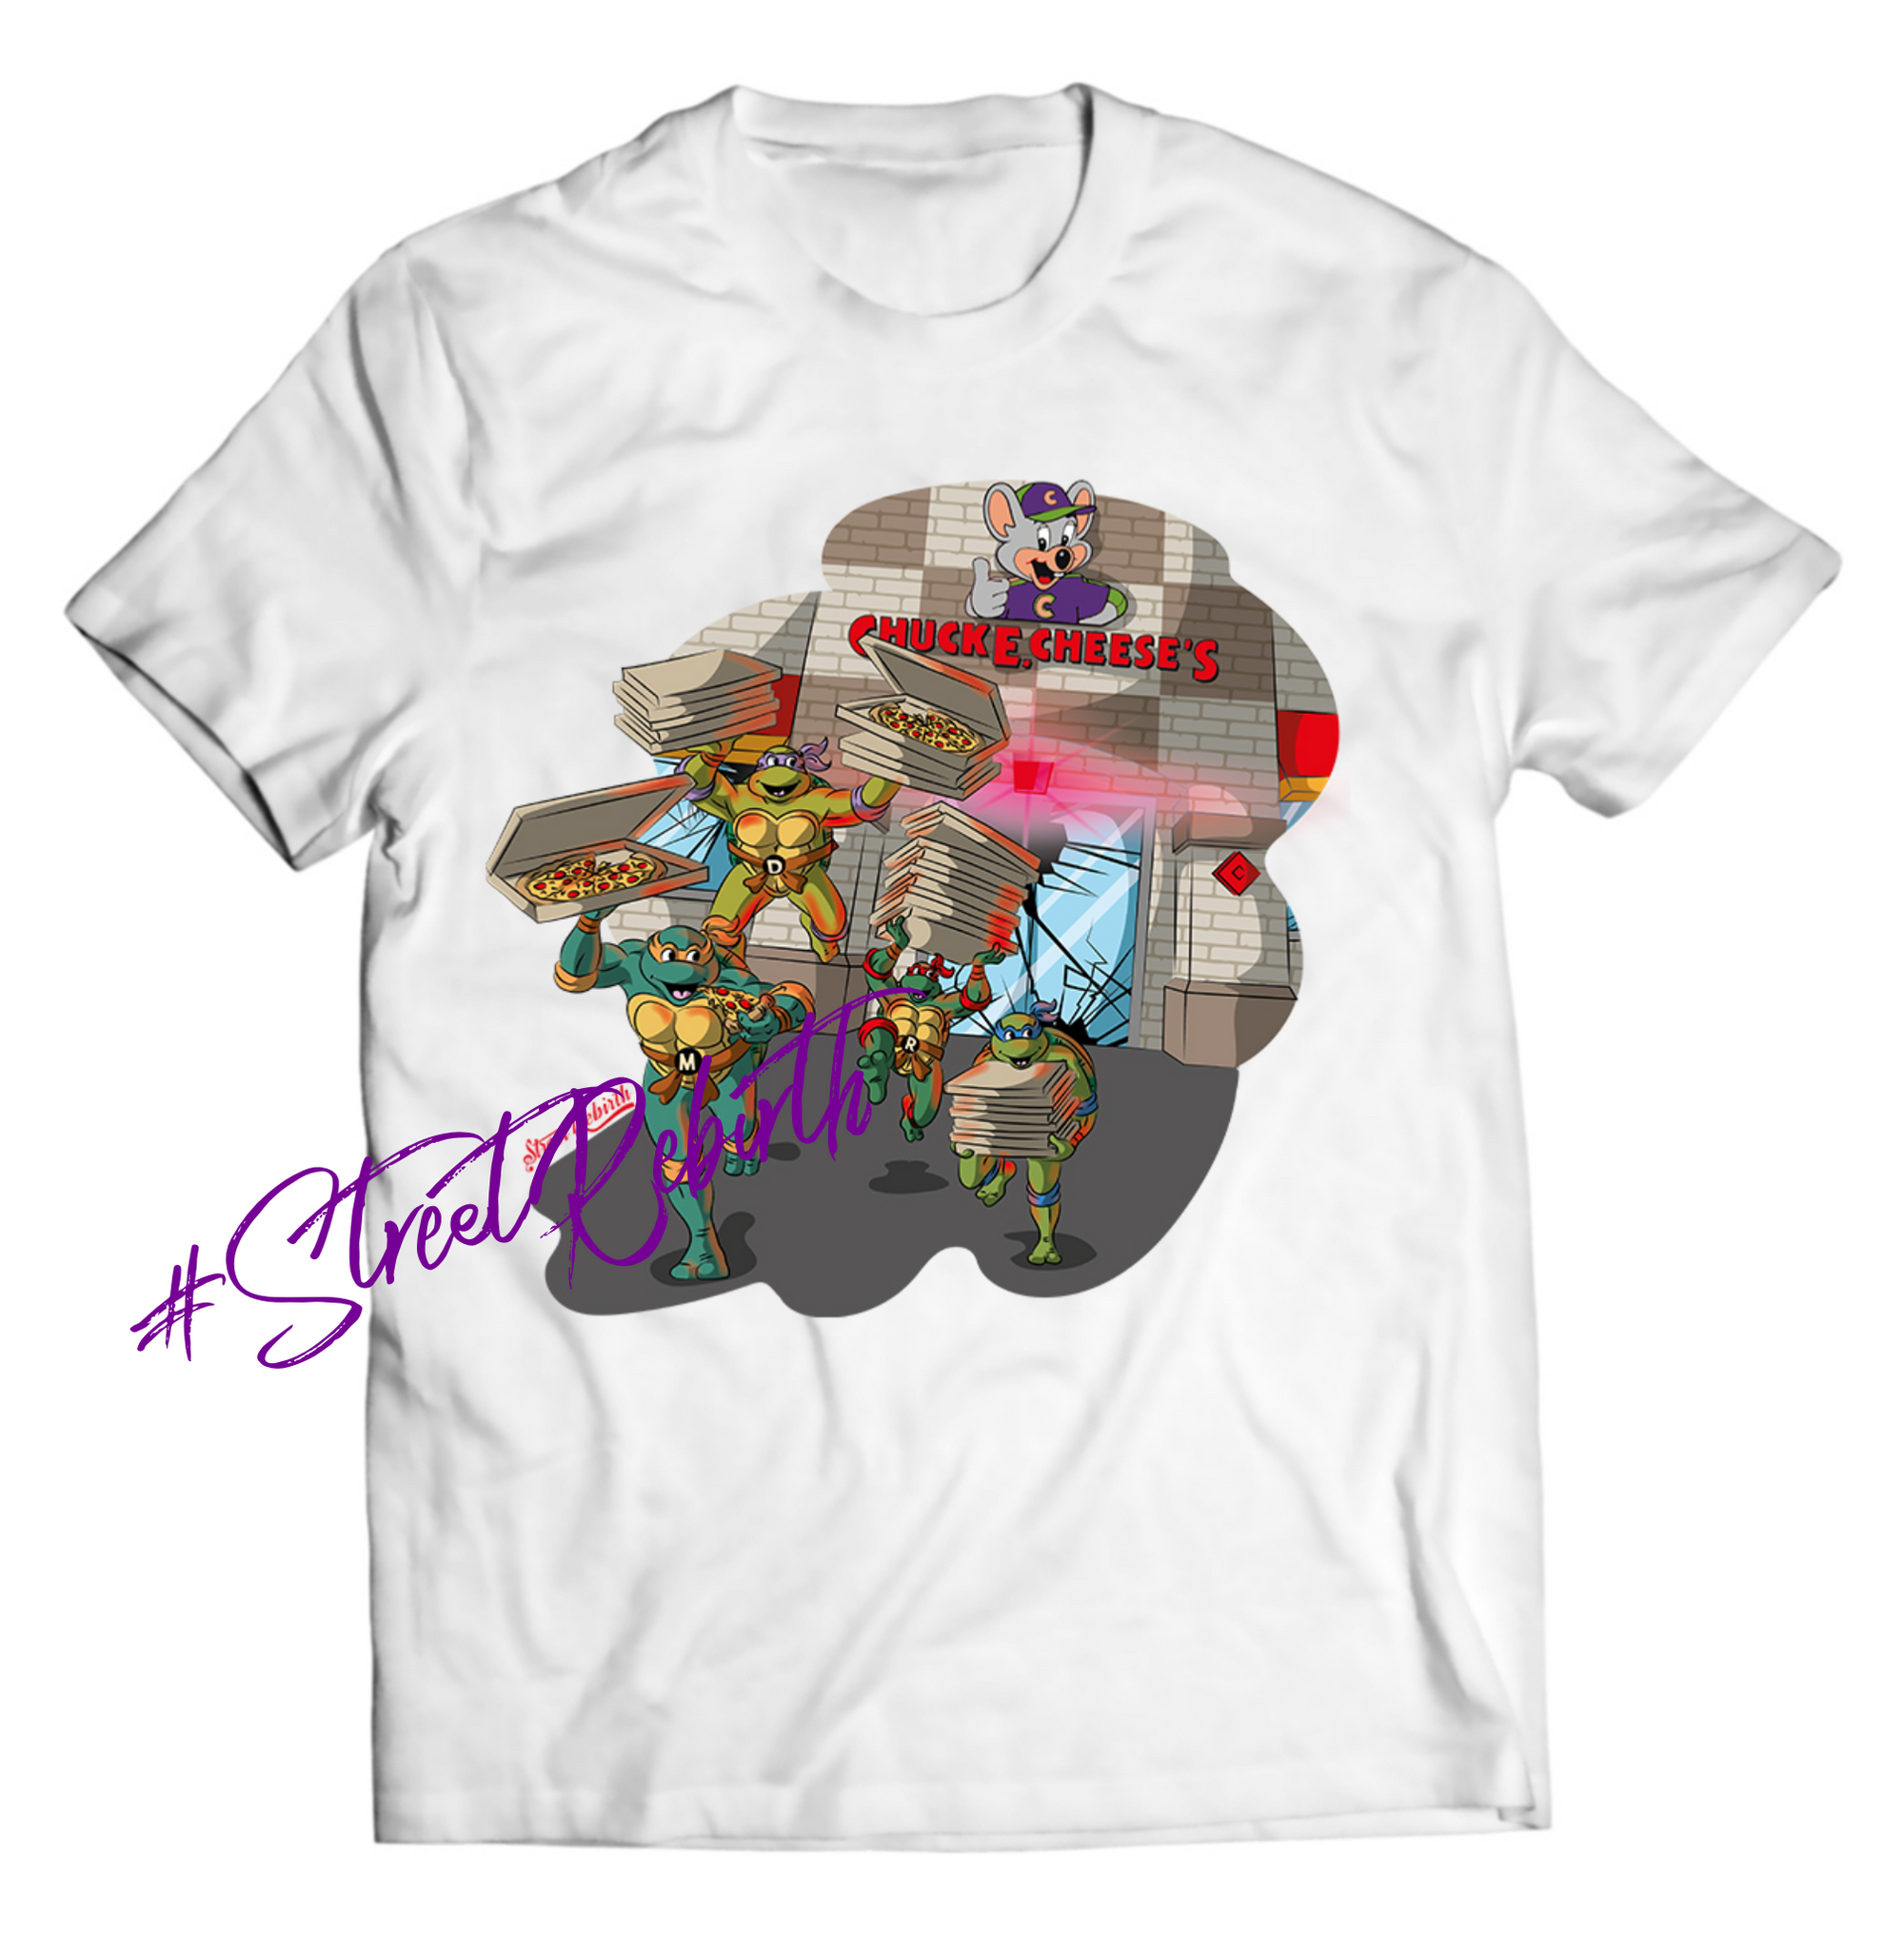 Ninja Turtles Shirt - Direct To Garment Quality Print - Unisex Shirt - Gift For Him or Her